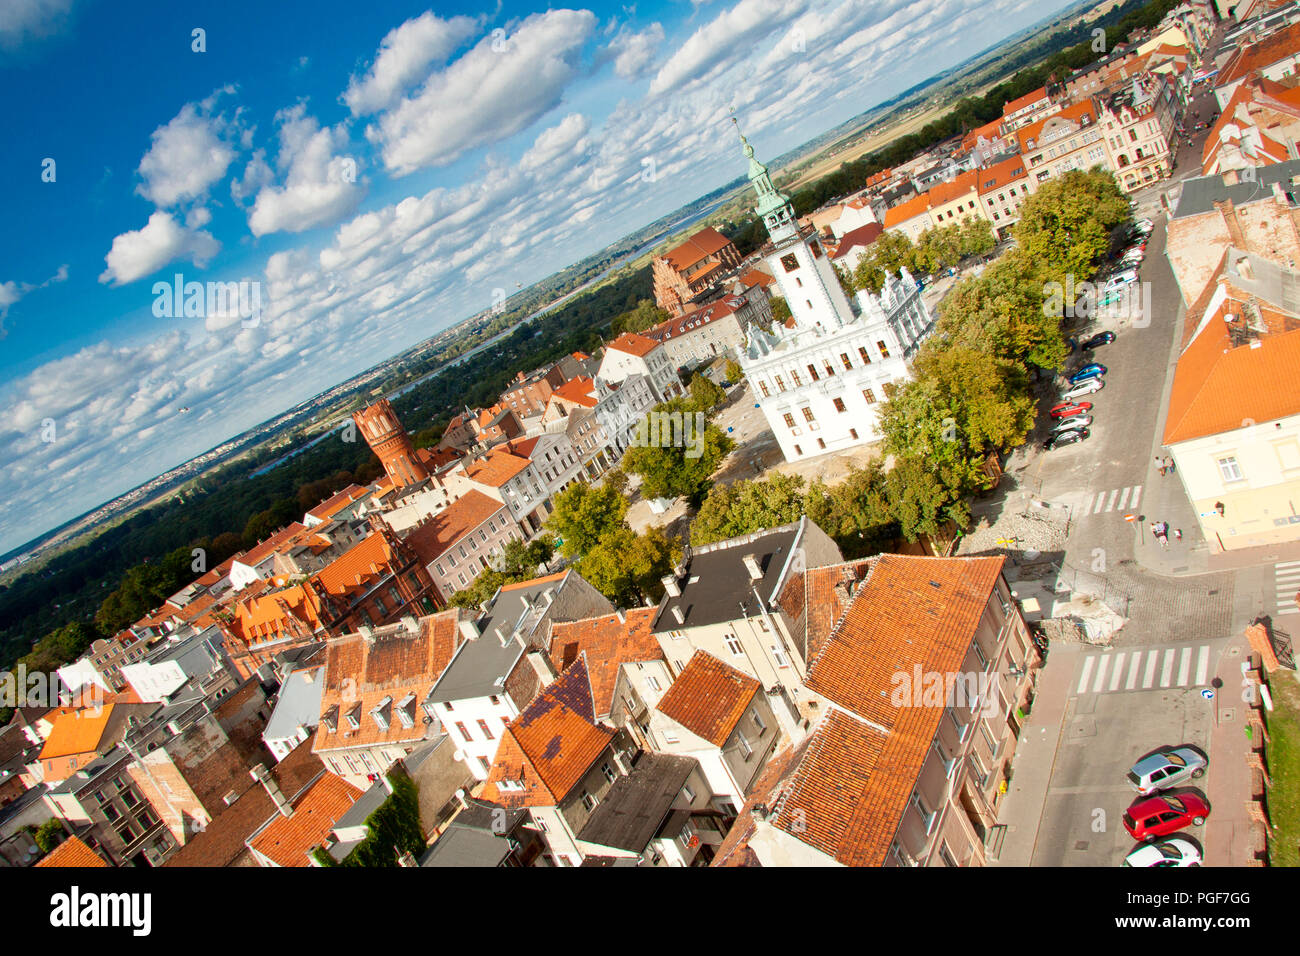 Aerial view on old town of Chelmno - Poland. Stock Photo